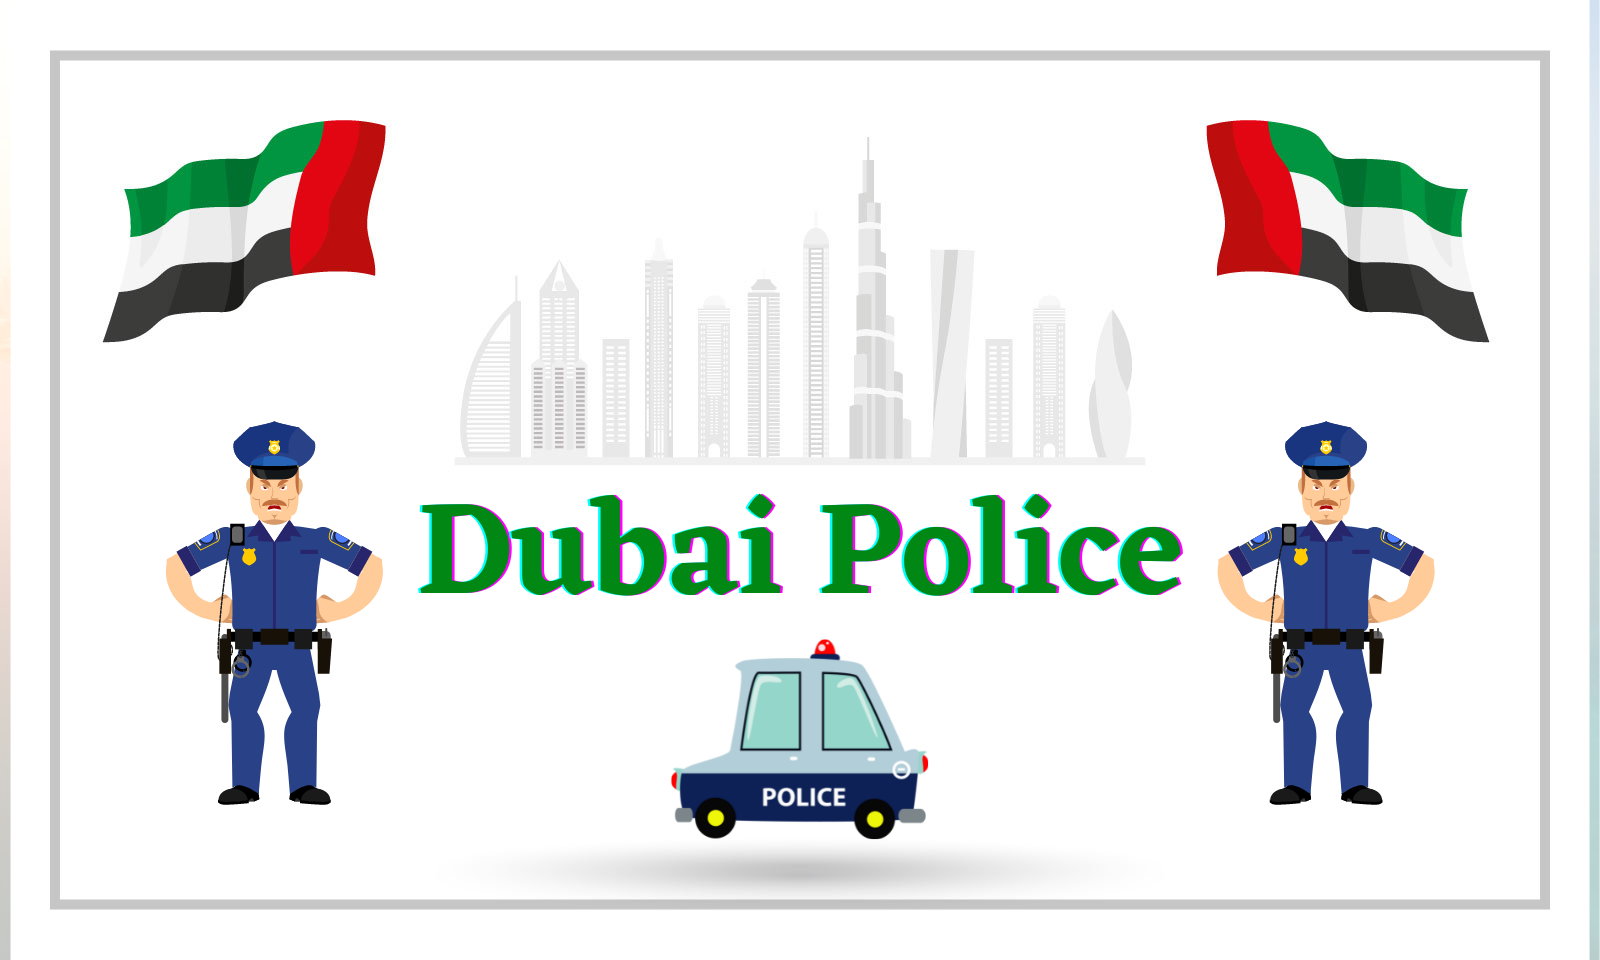 Dubai Police - Introduction